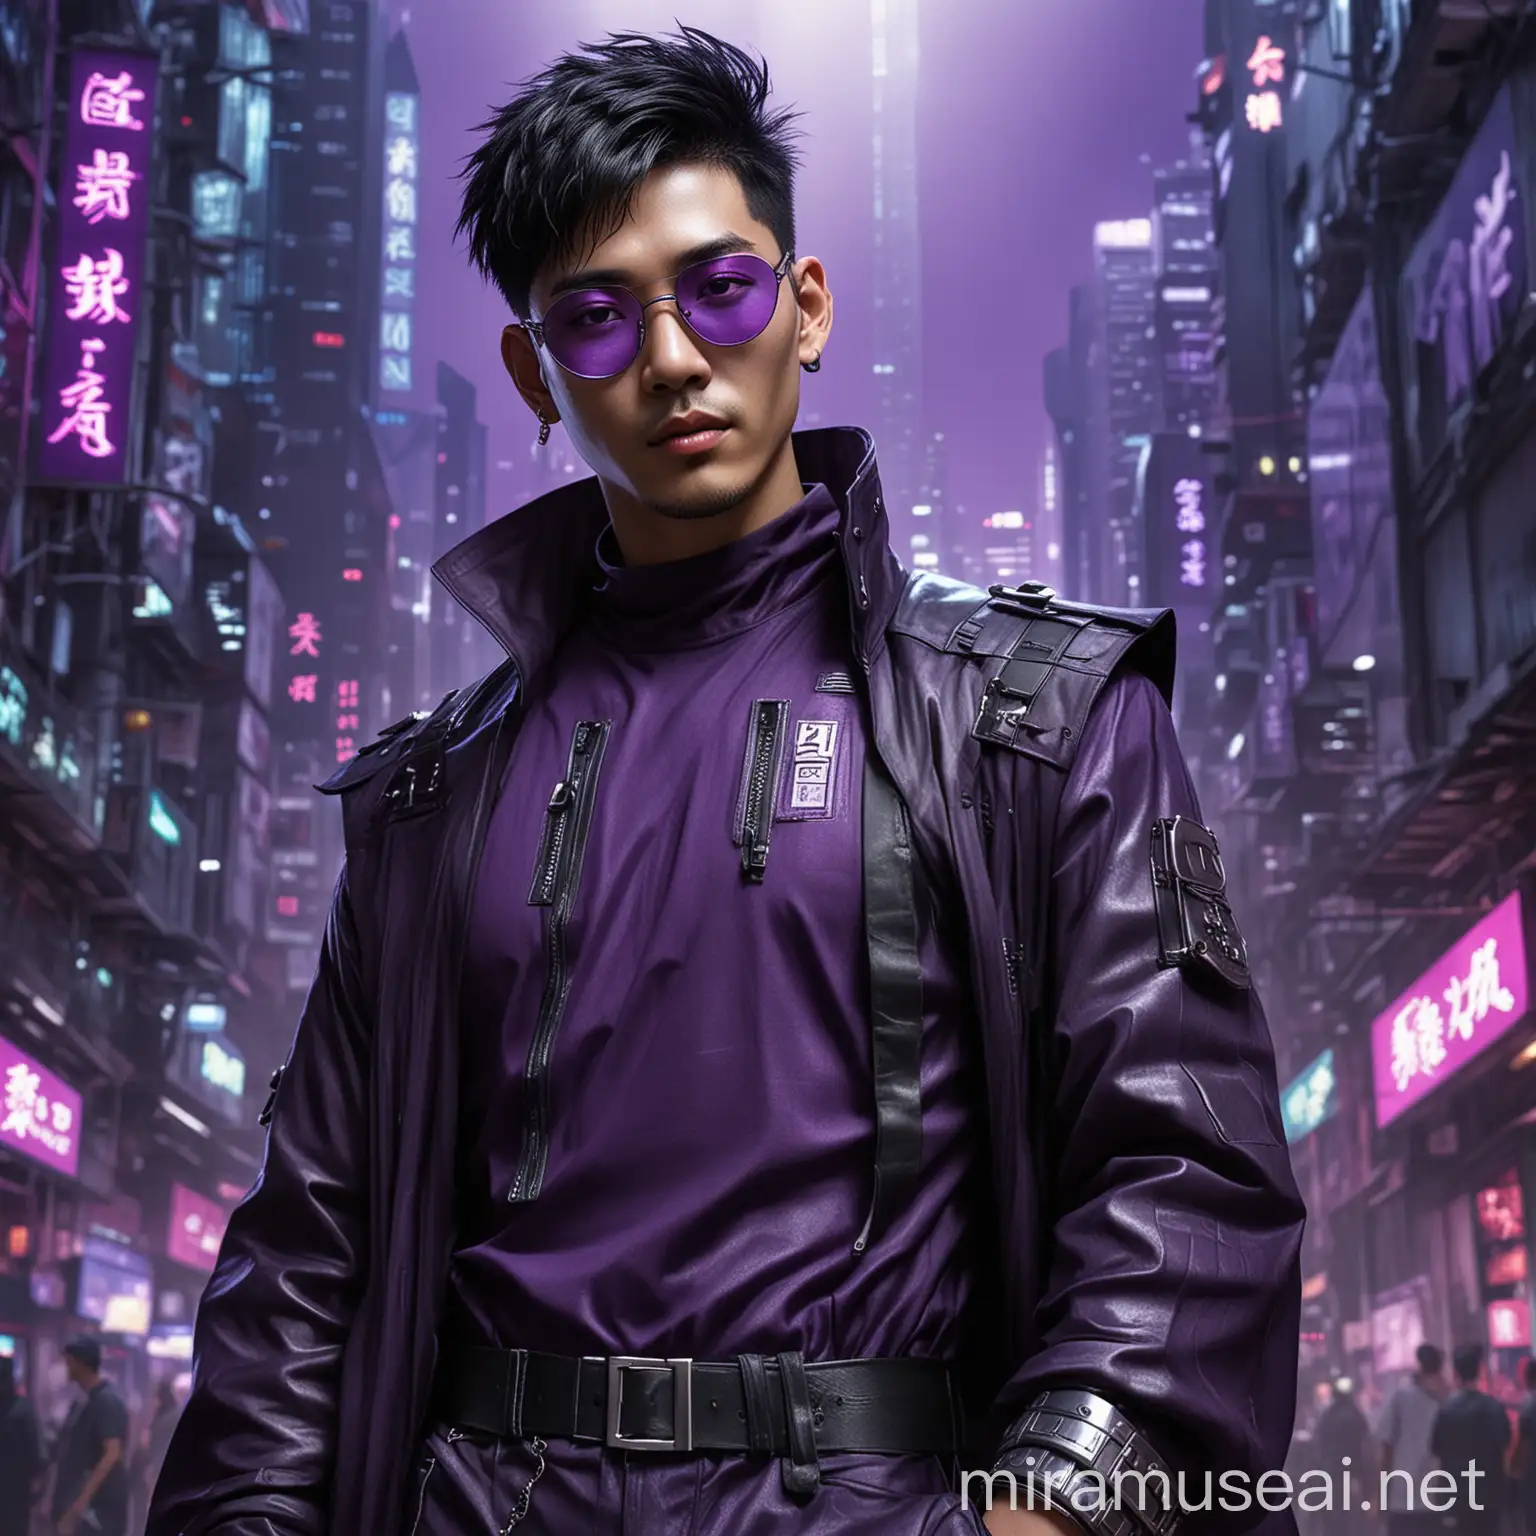 Tall Cyberpunk Men in Purple with Hong Kong Flair